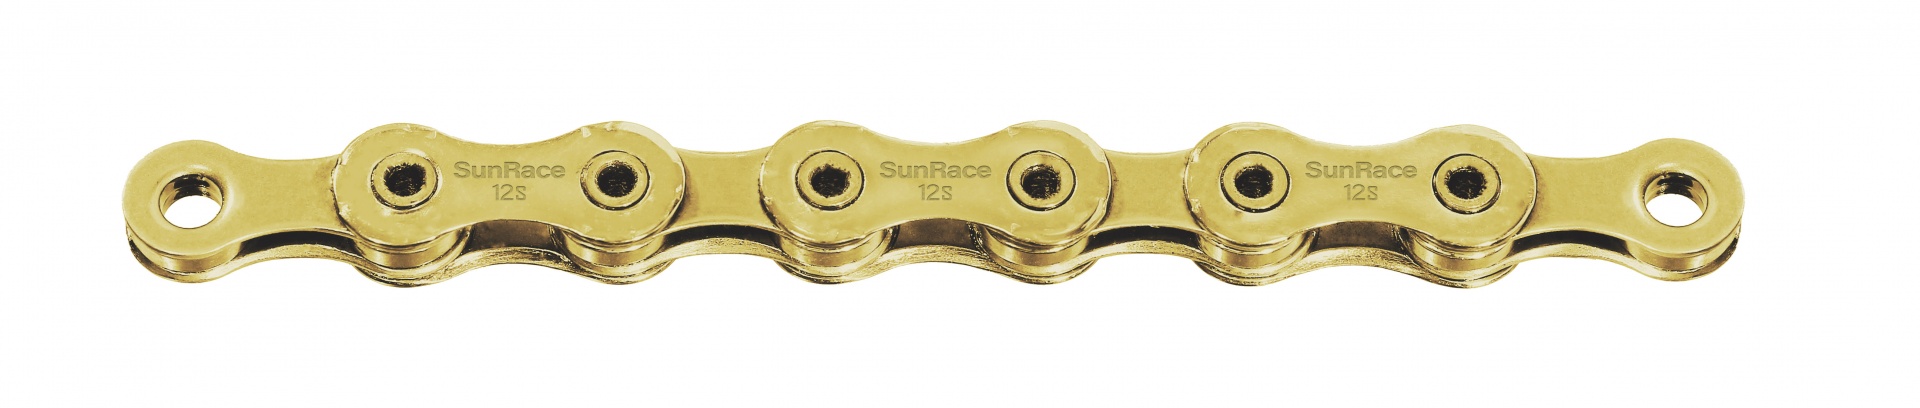 Sunrace CN12H 12-fach Kette gold SL 126L